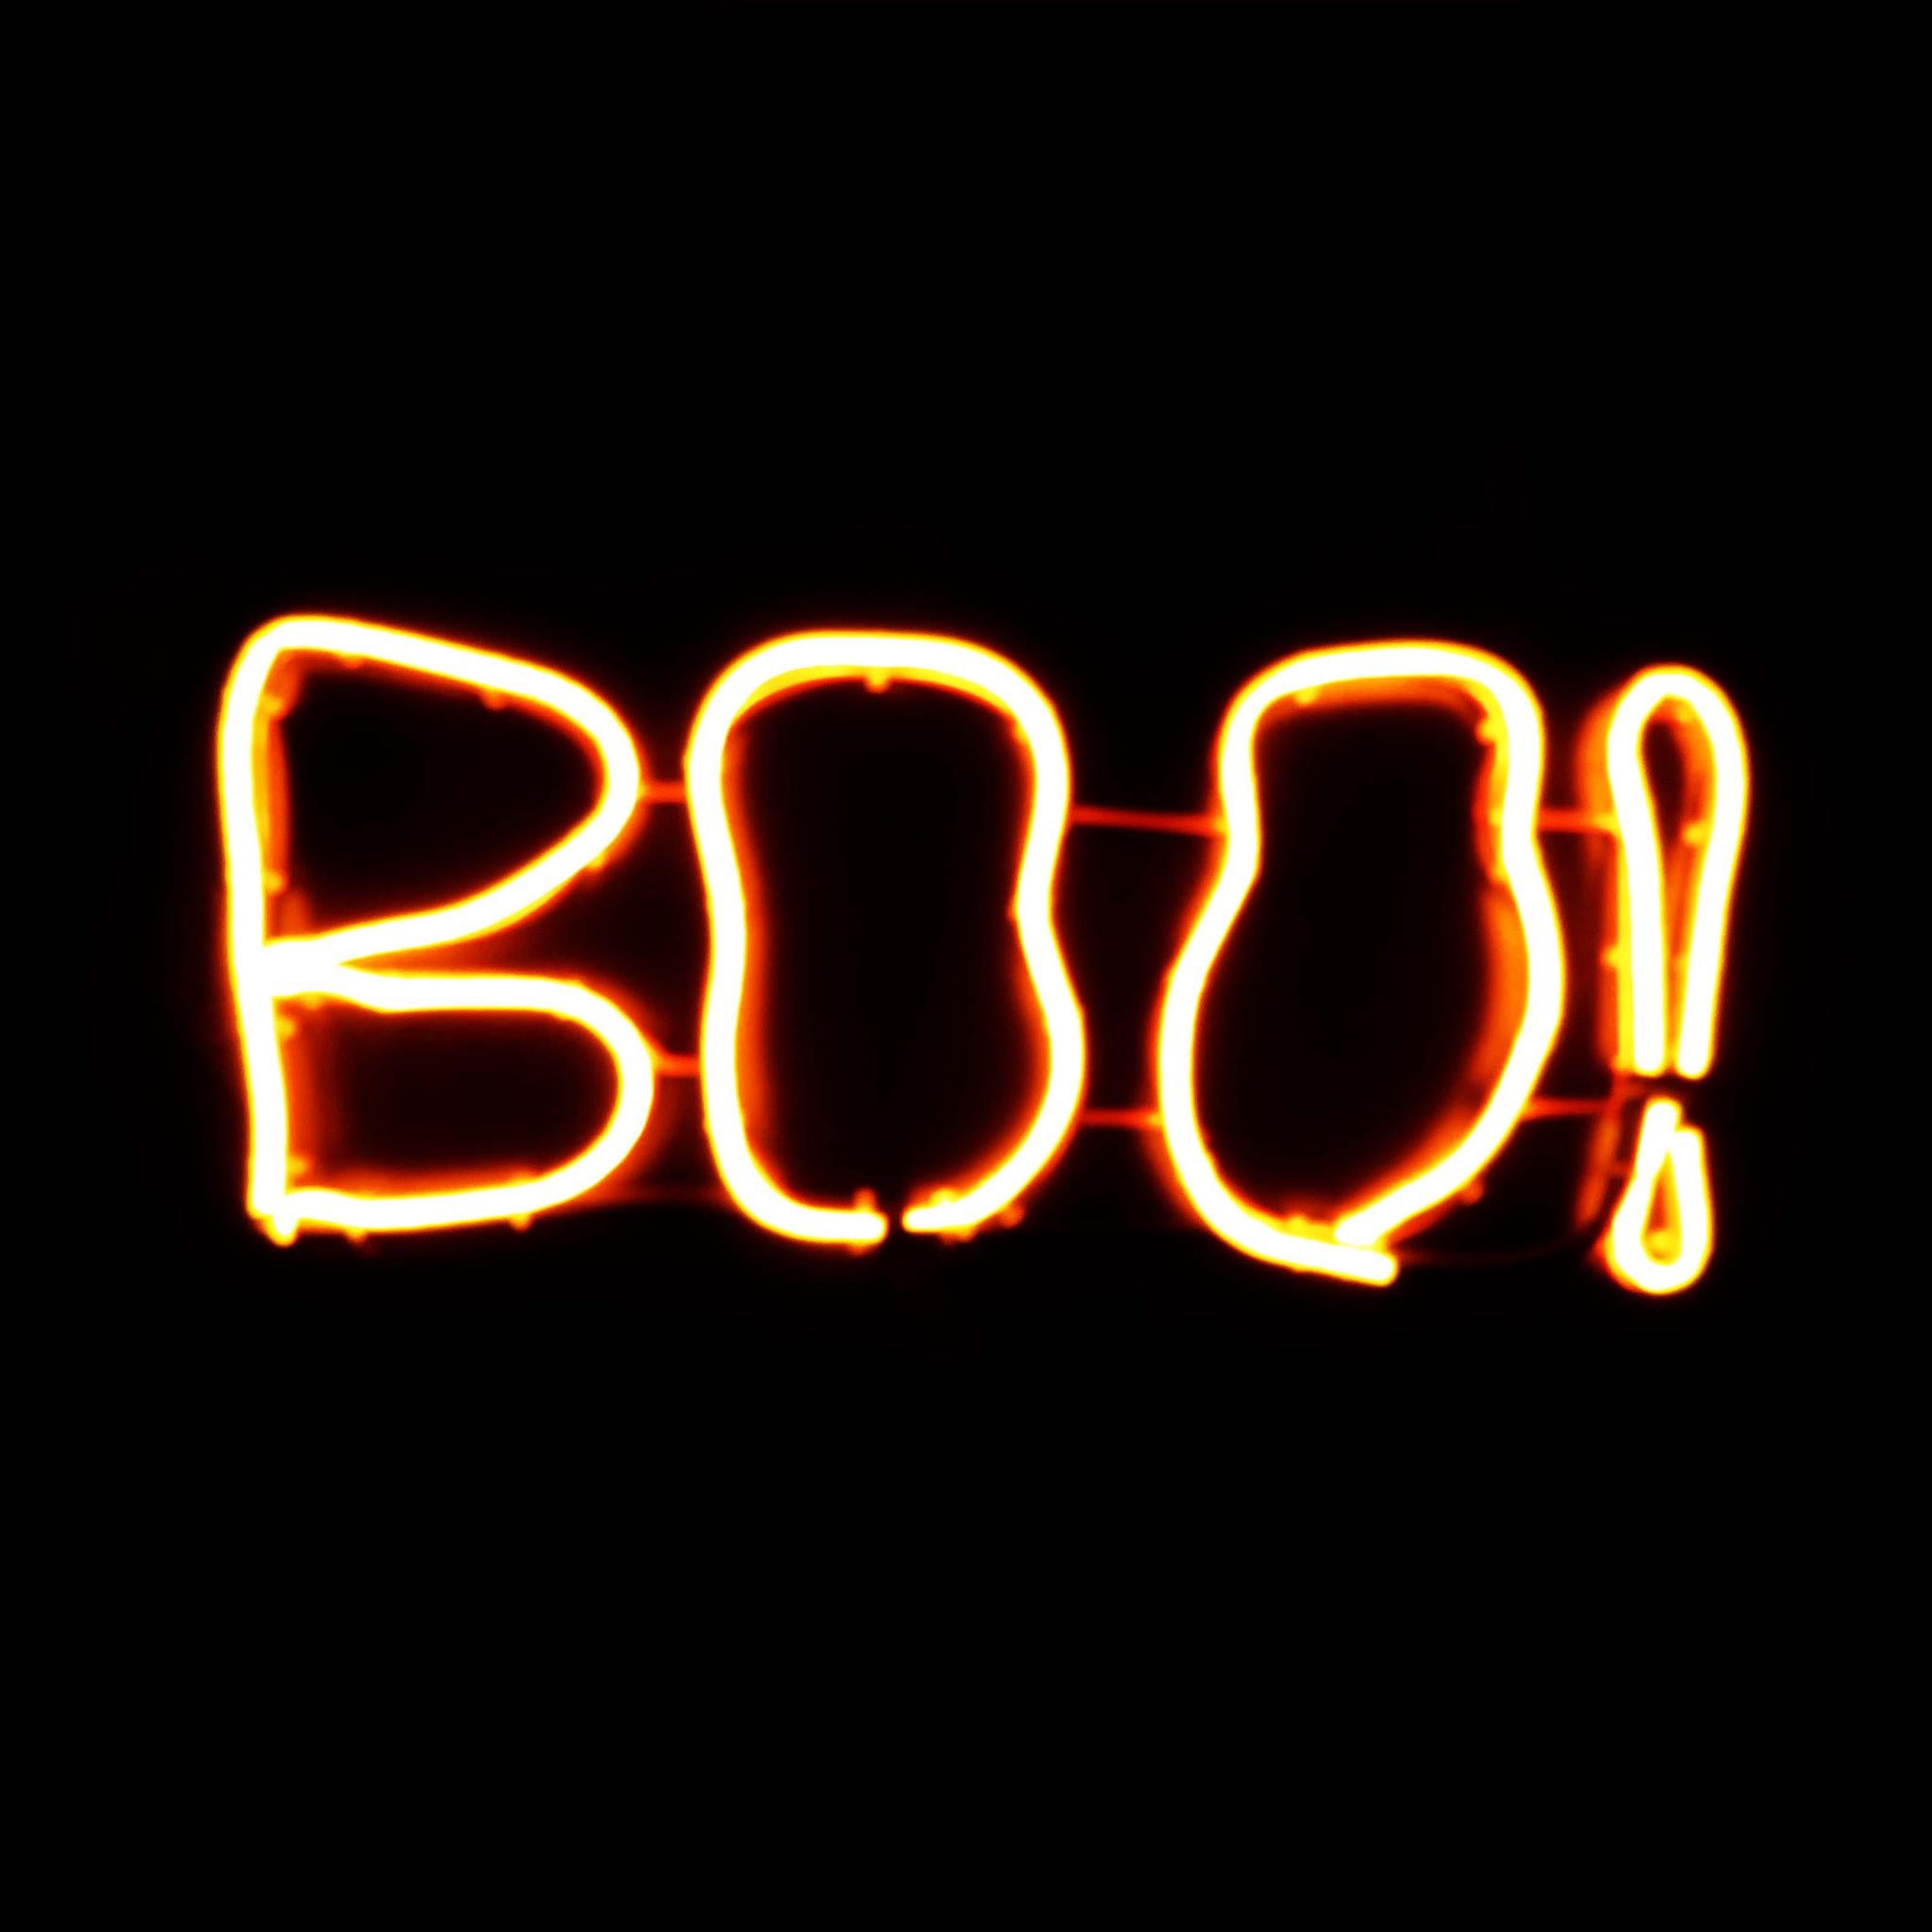 BOO Neon glow halloween SIGN